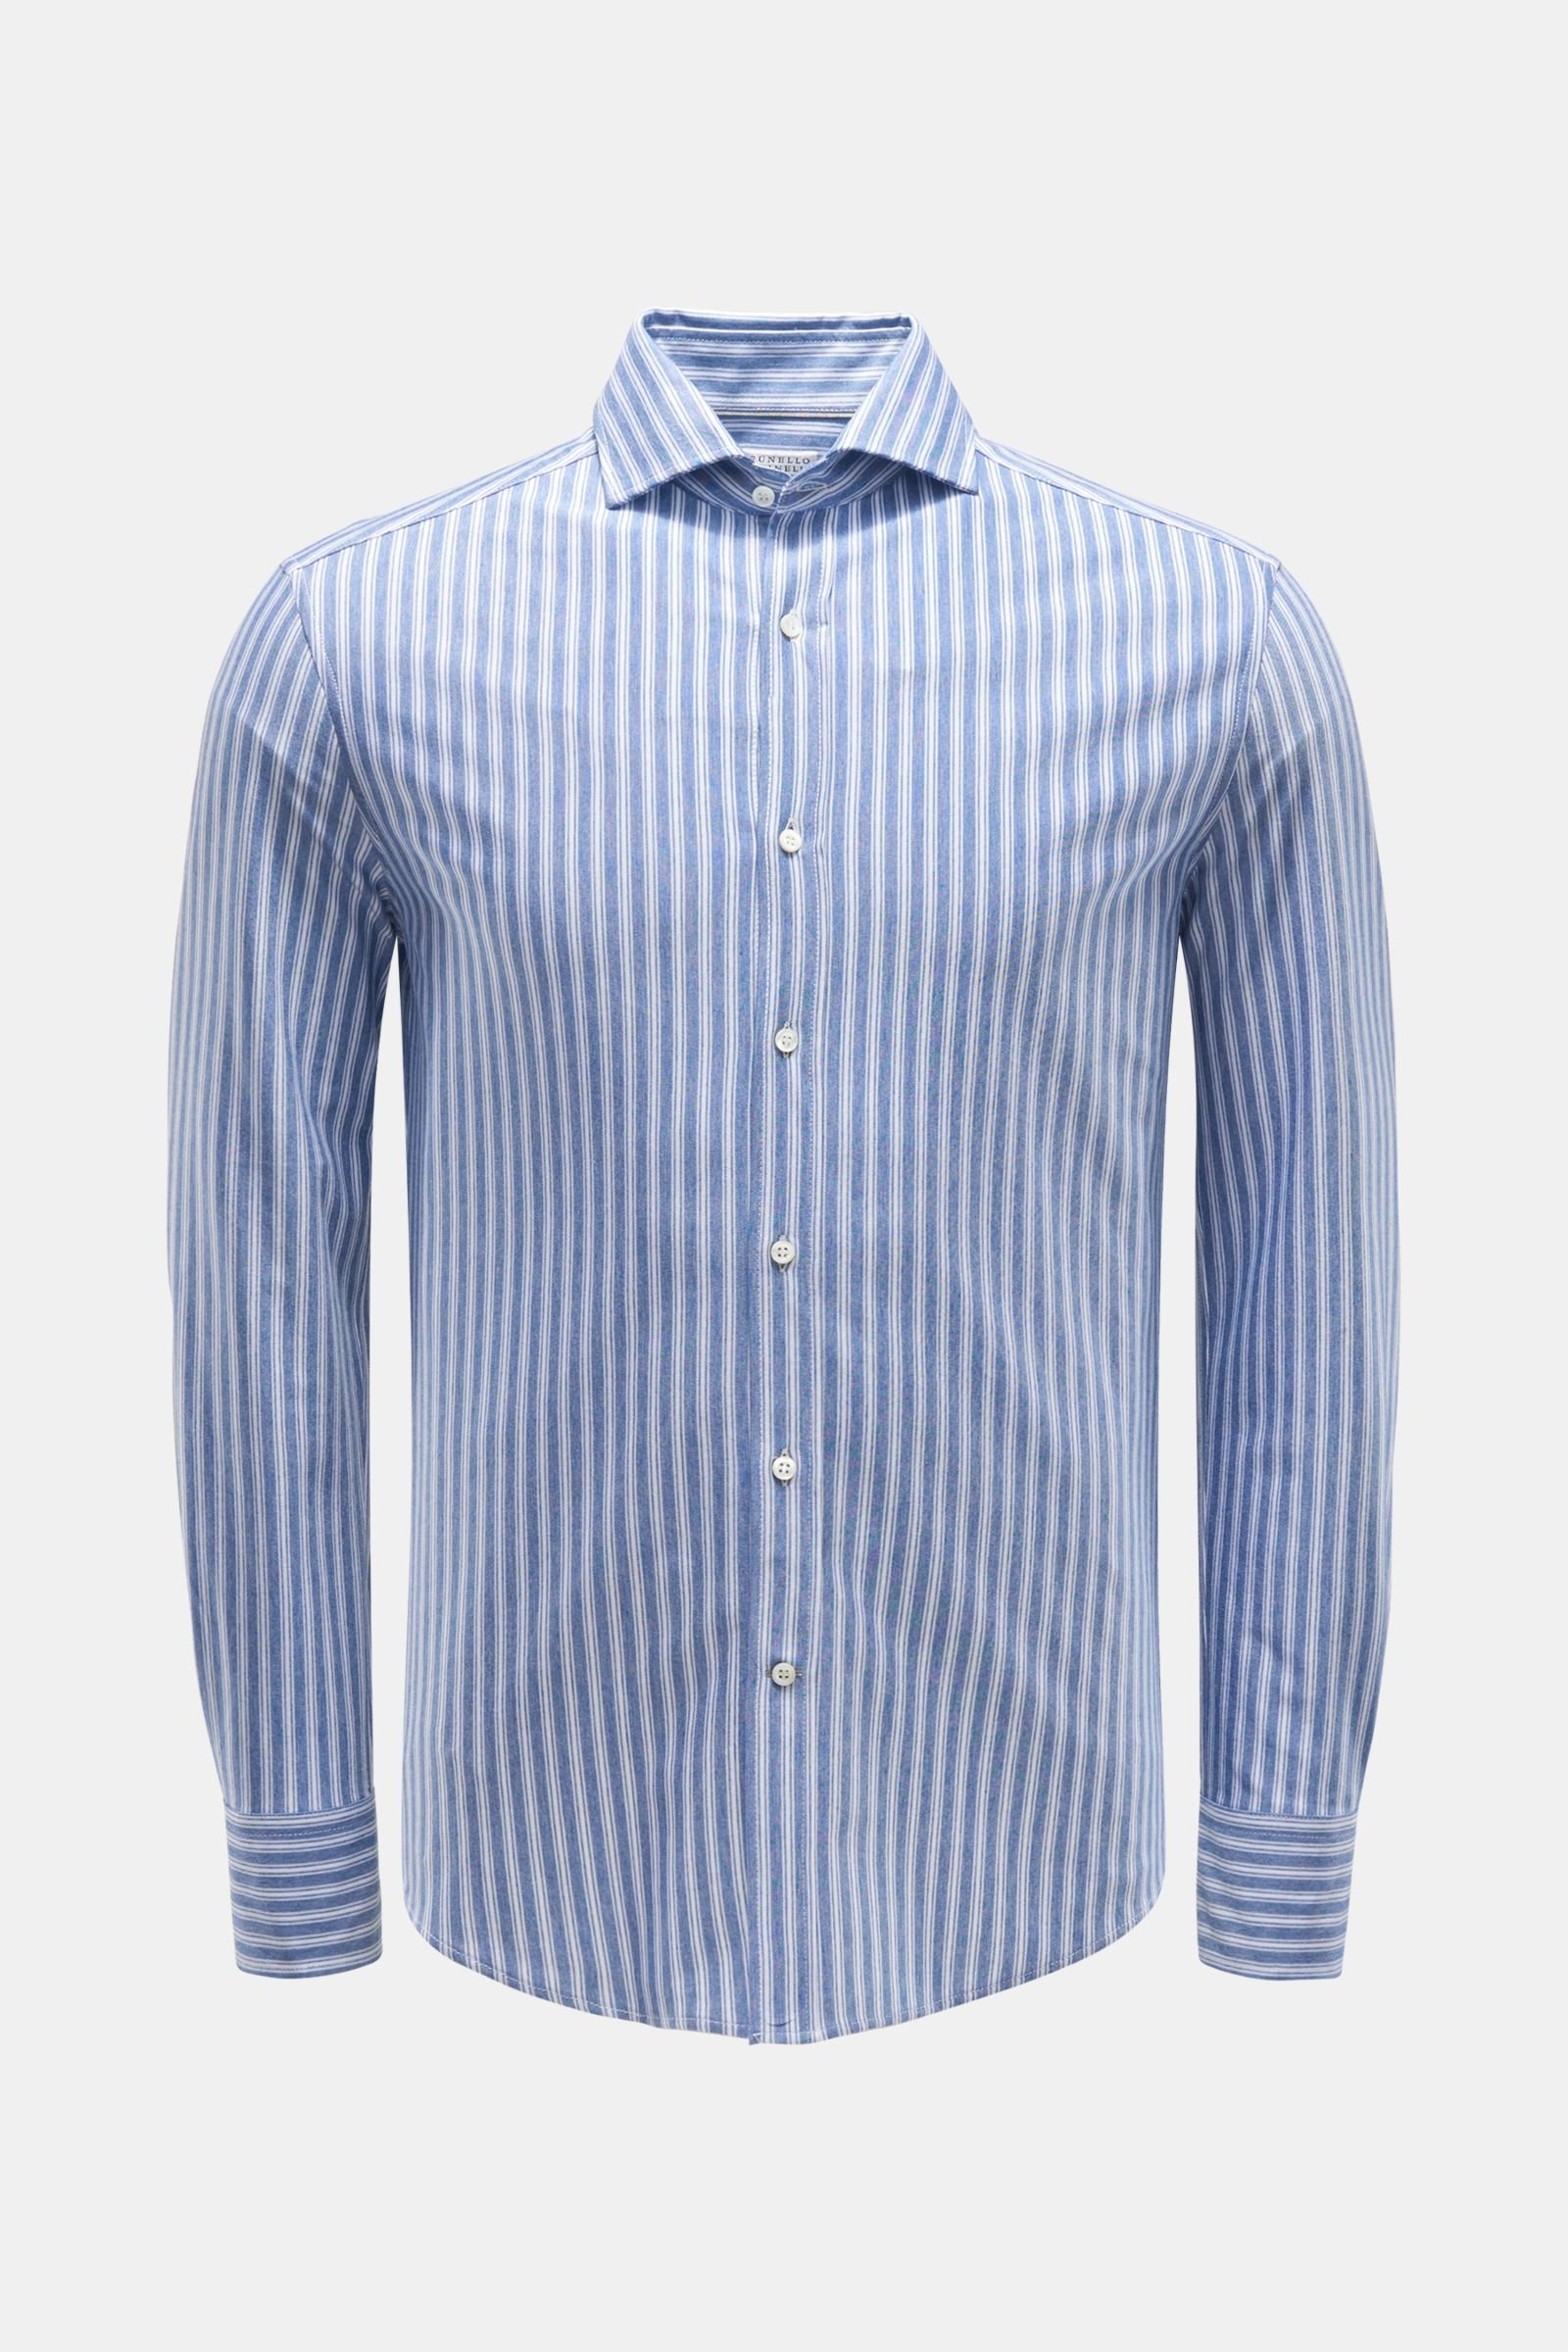 Jersey shirt shark collar grey-blue/white striped